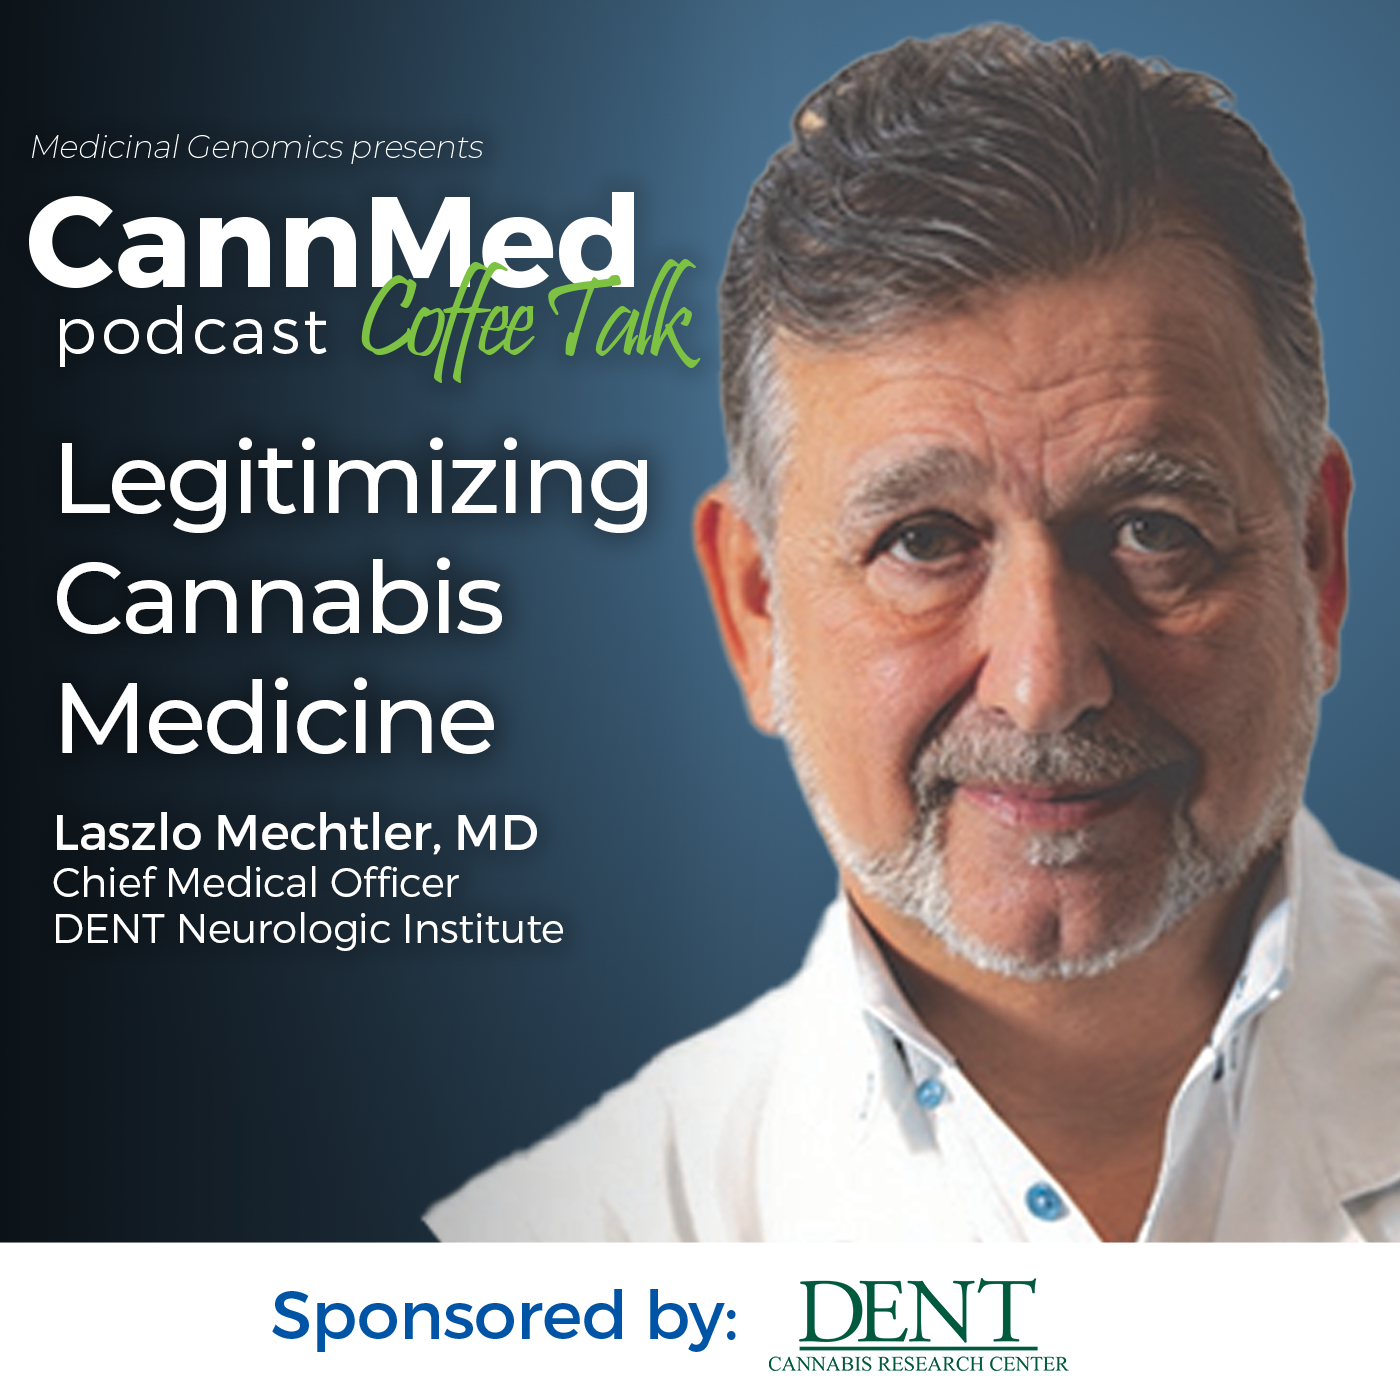 Featured image for “Legitimizing Cannabis Medicine with Laszlo Mechtler, MD”